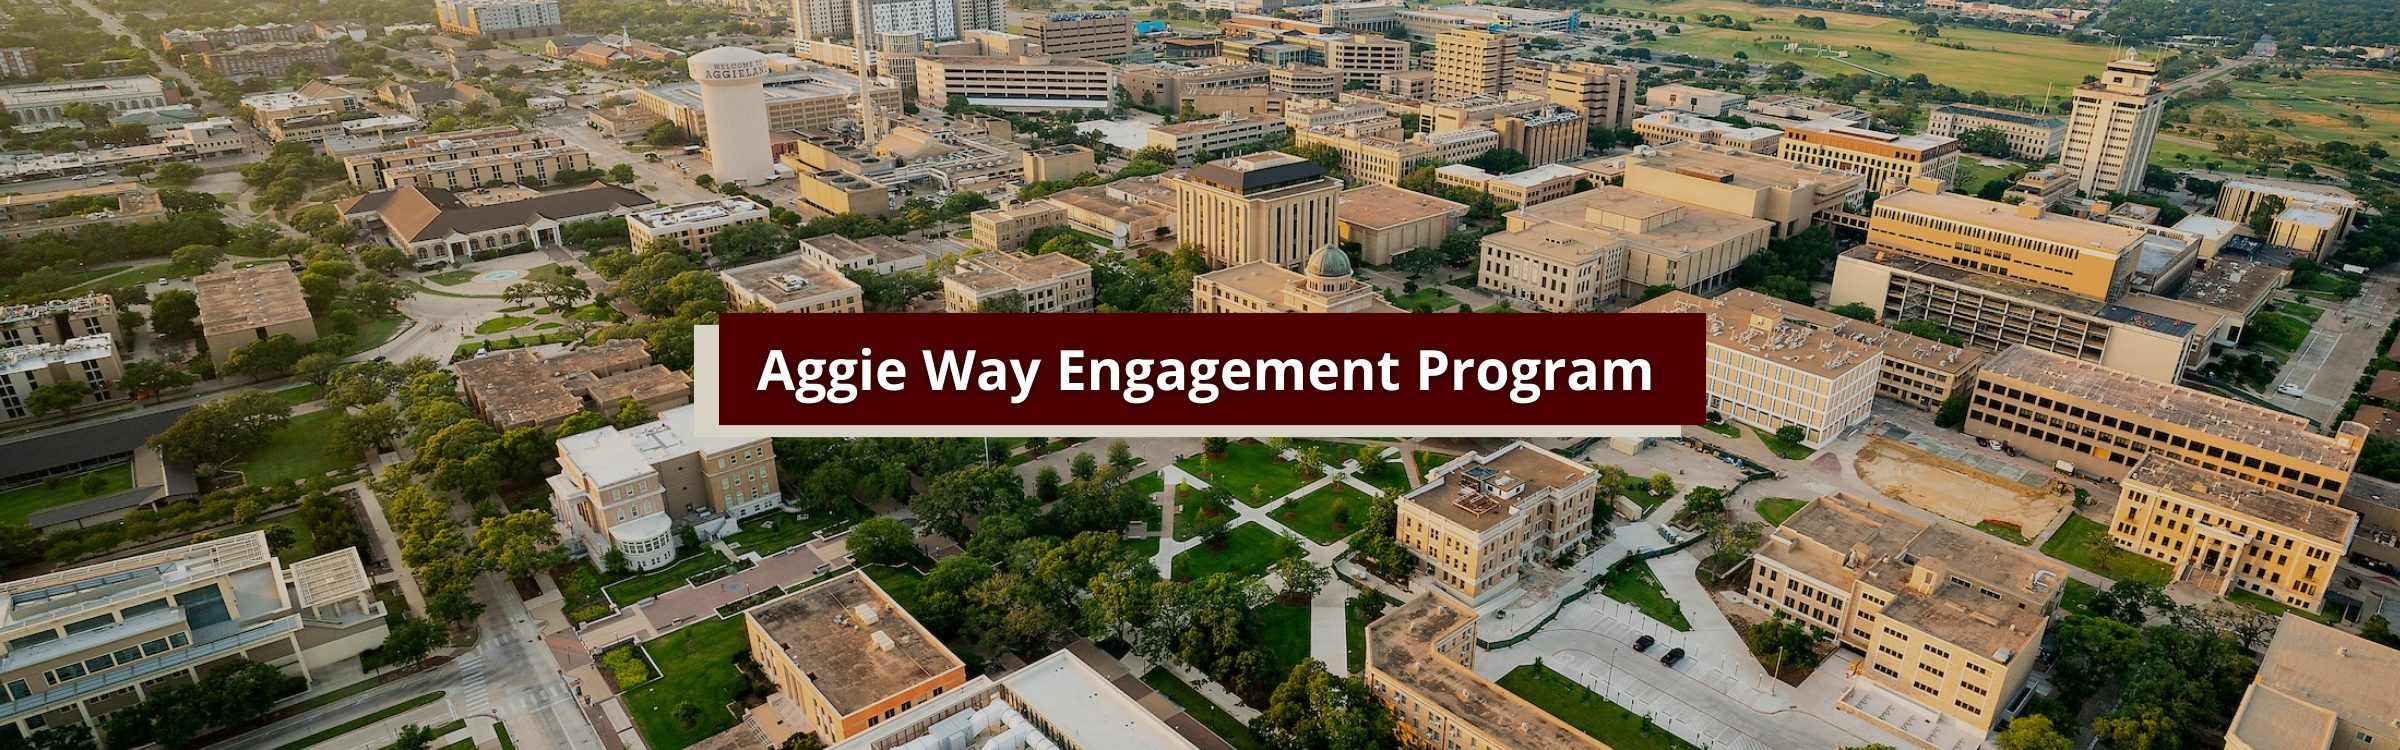 Aggie Way Engagement Program